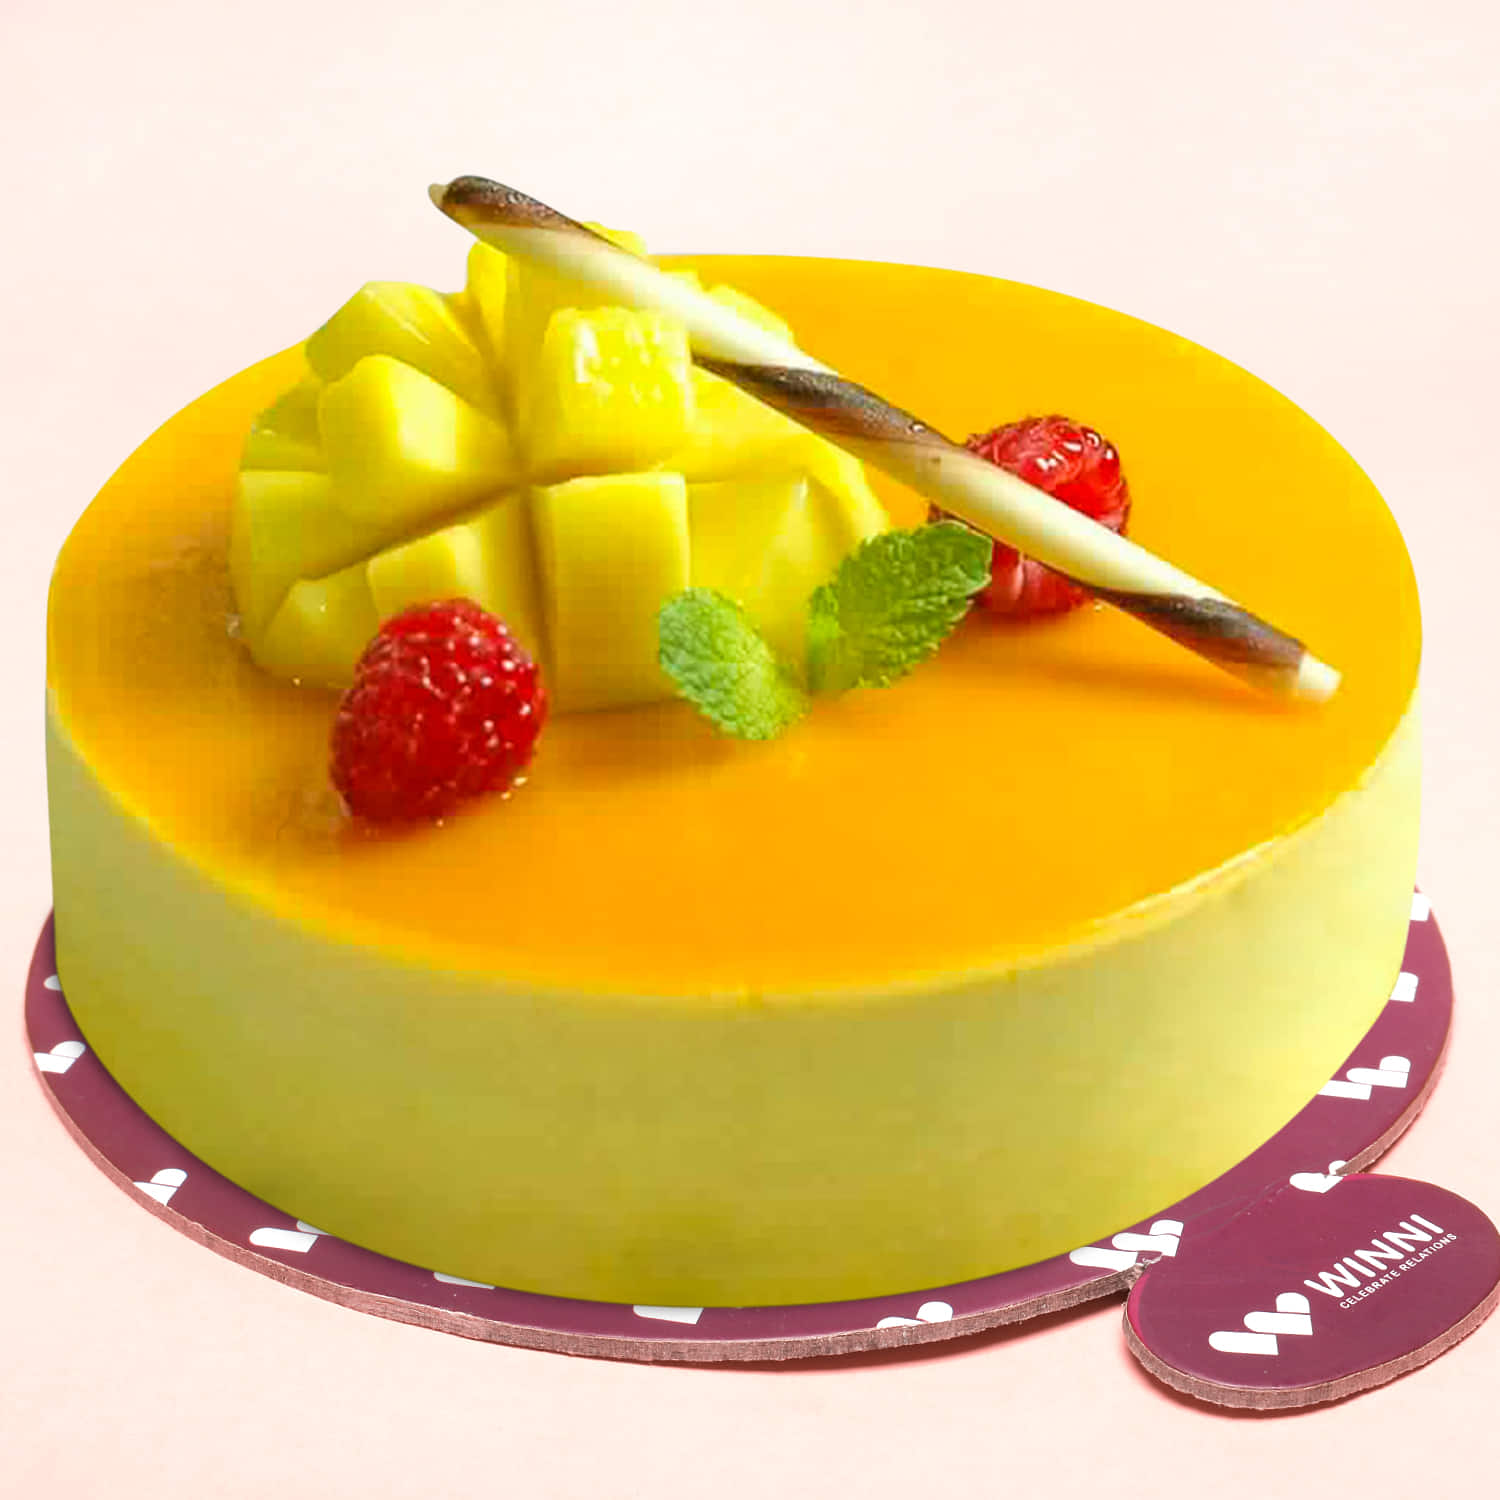 Mango Cake - Catherine Zhang